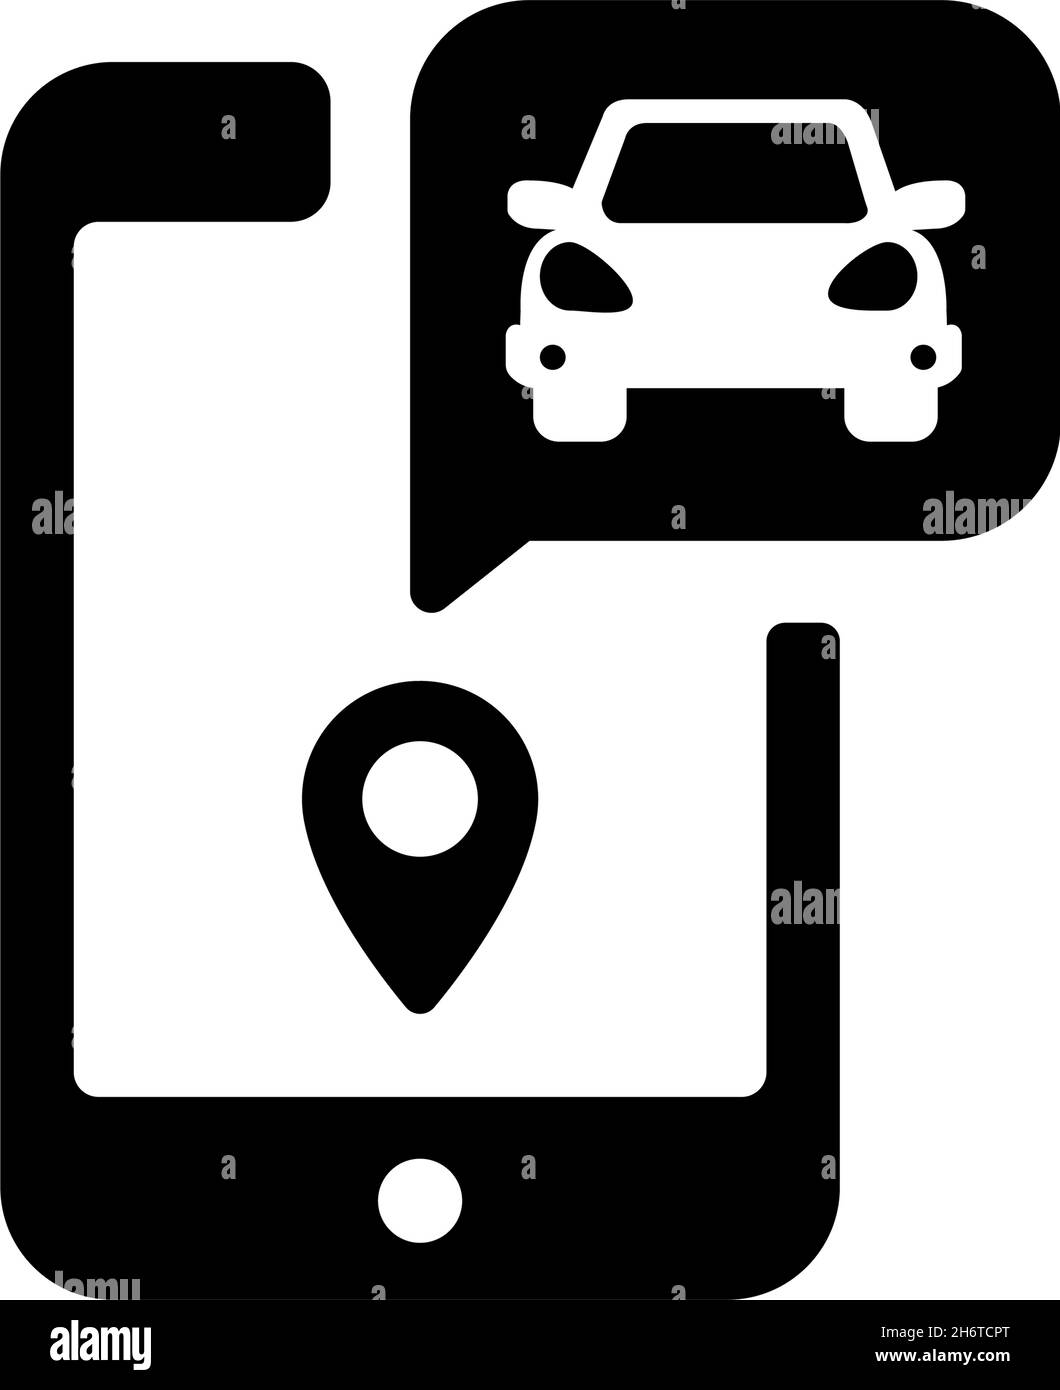 Taxi (cab) app, ride share app vector icon illustration Stock Vector